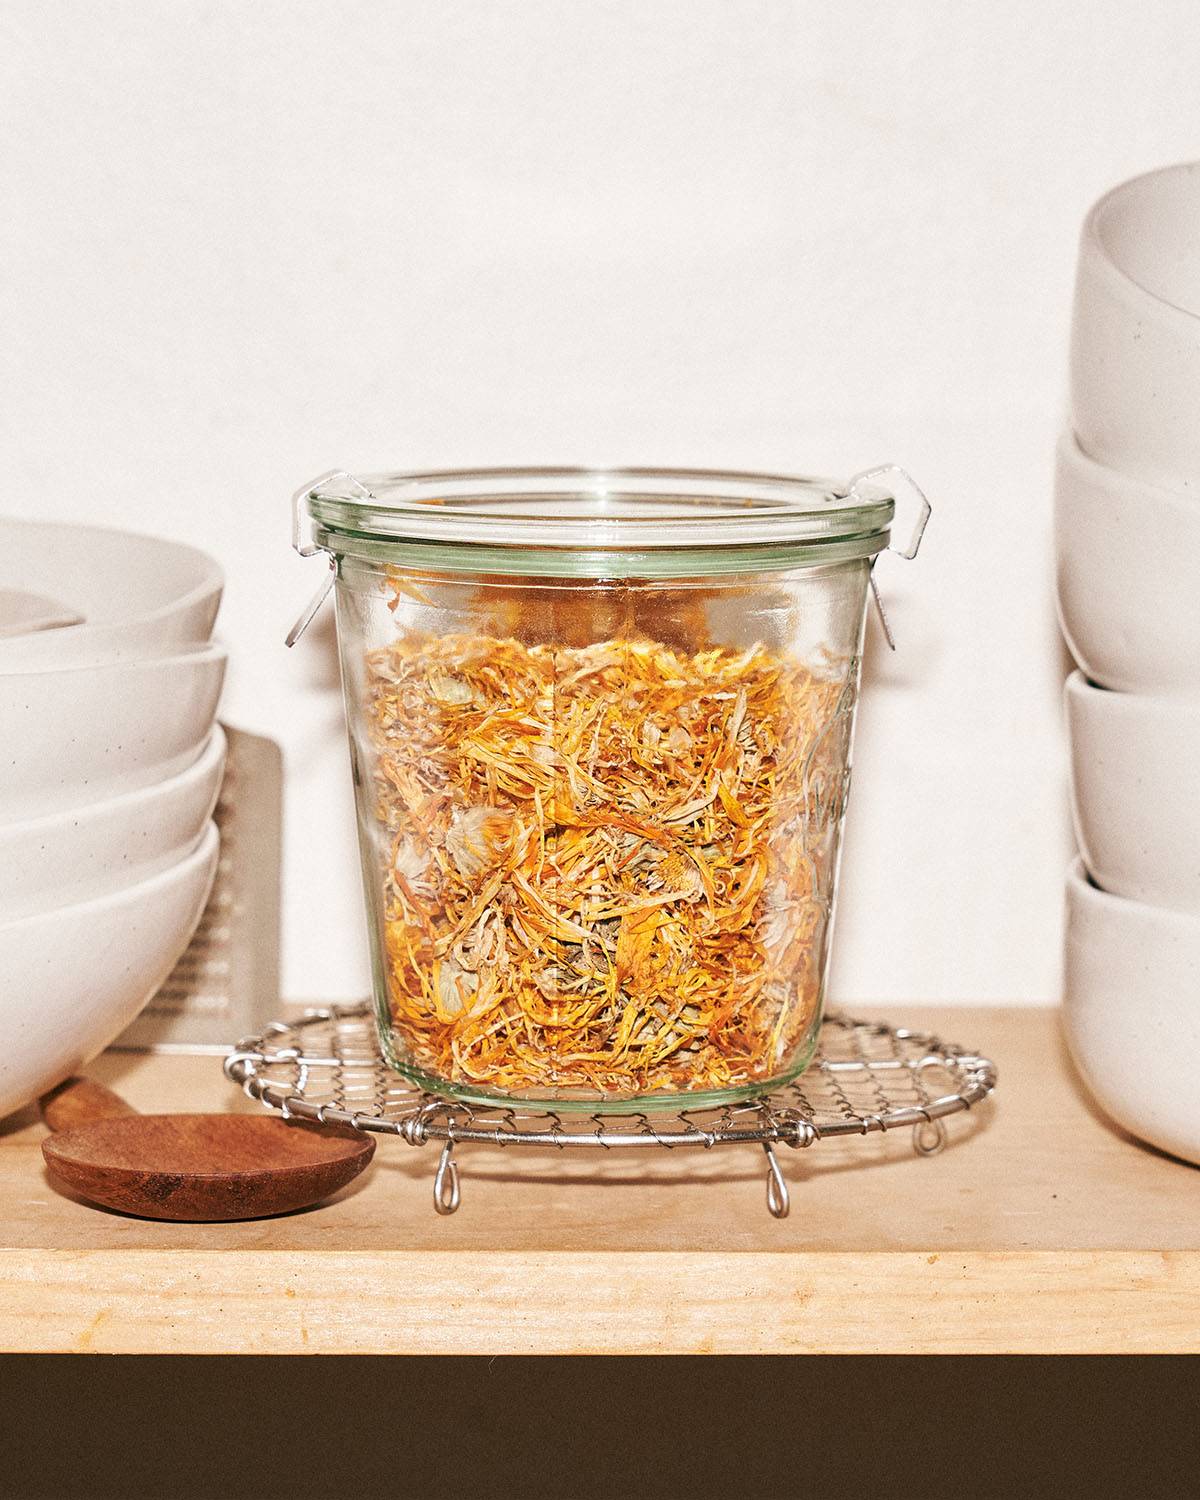 A Weck jar filled with dry calendula petals on a kitchen shelf.